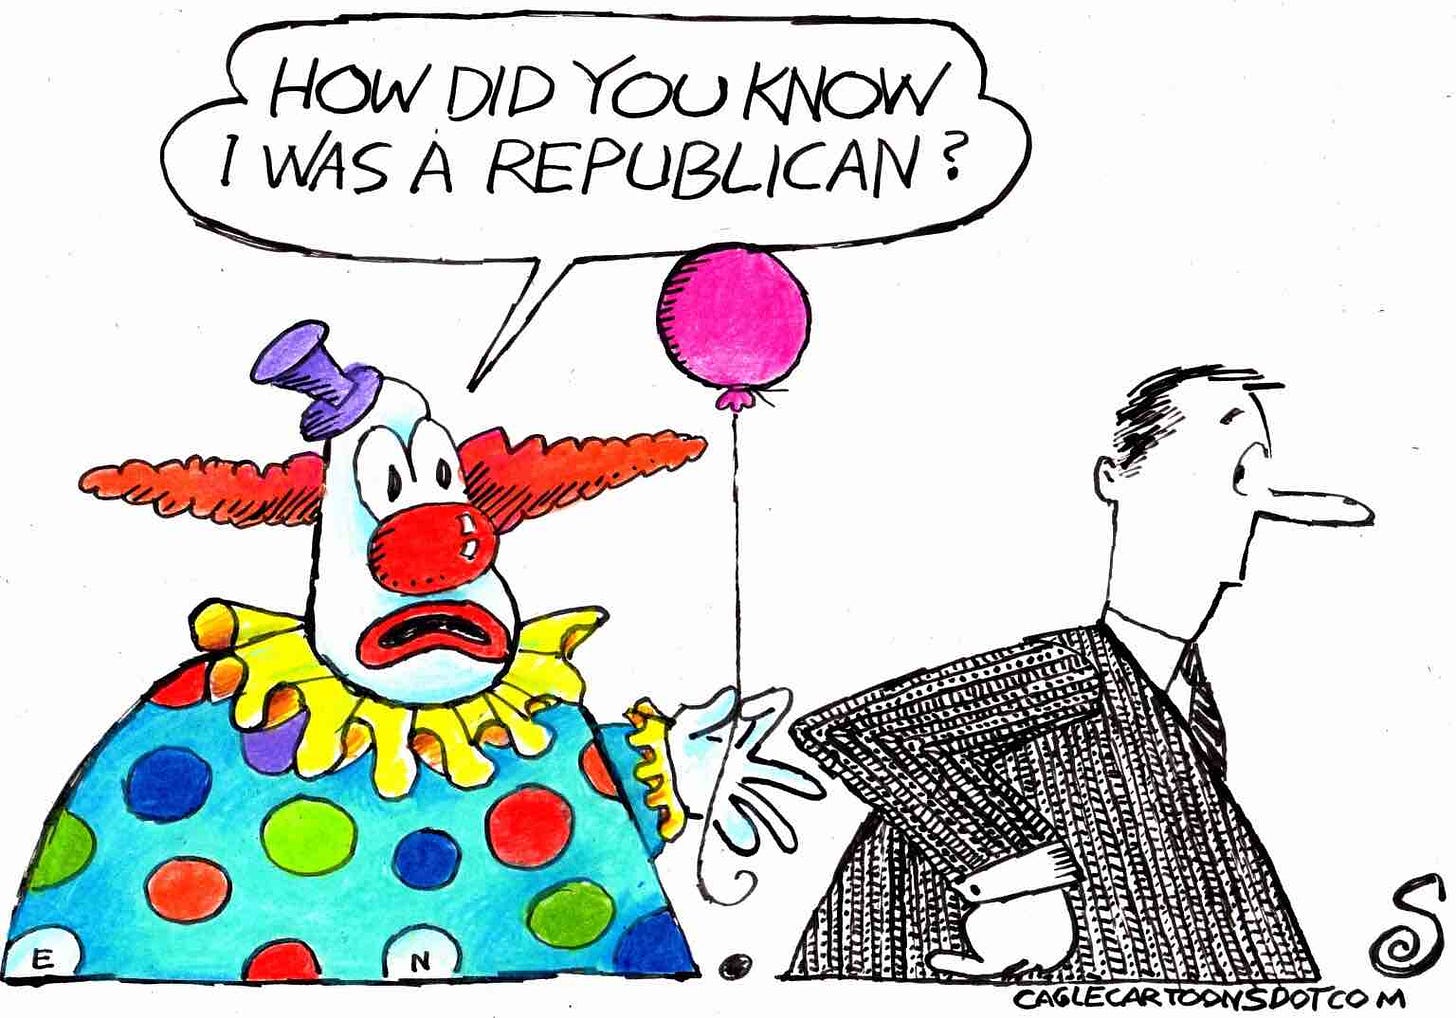 MAGA Clown Caucus creates chaos to score political points